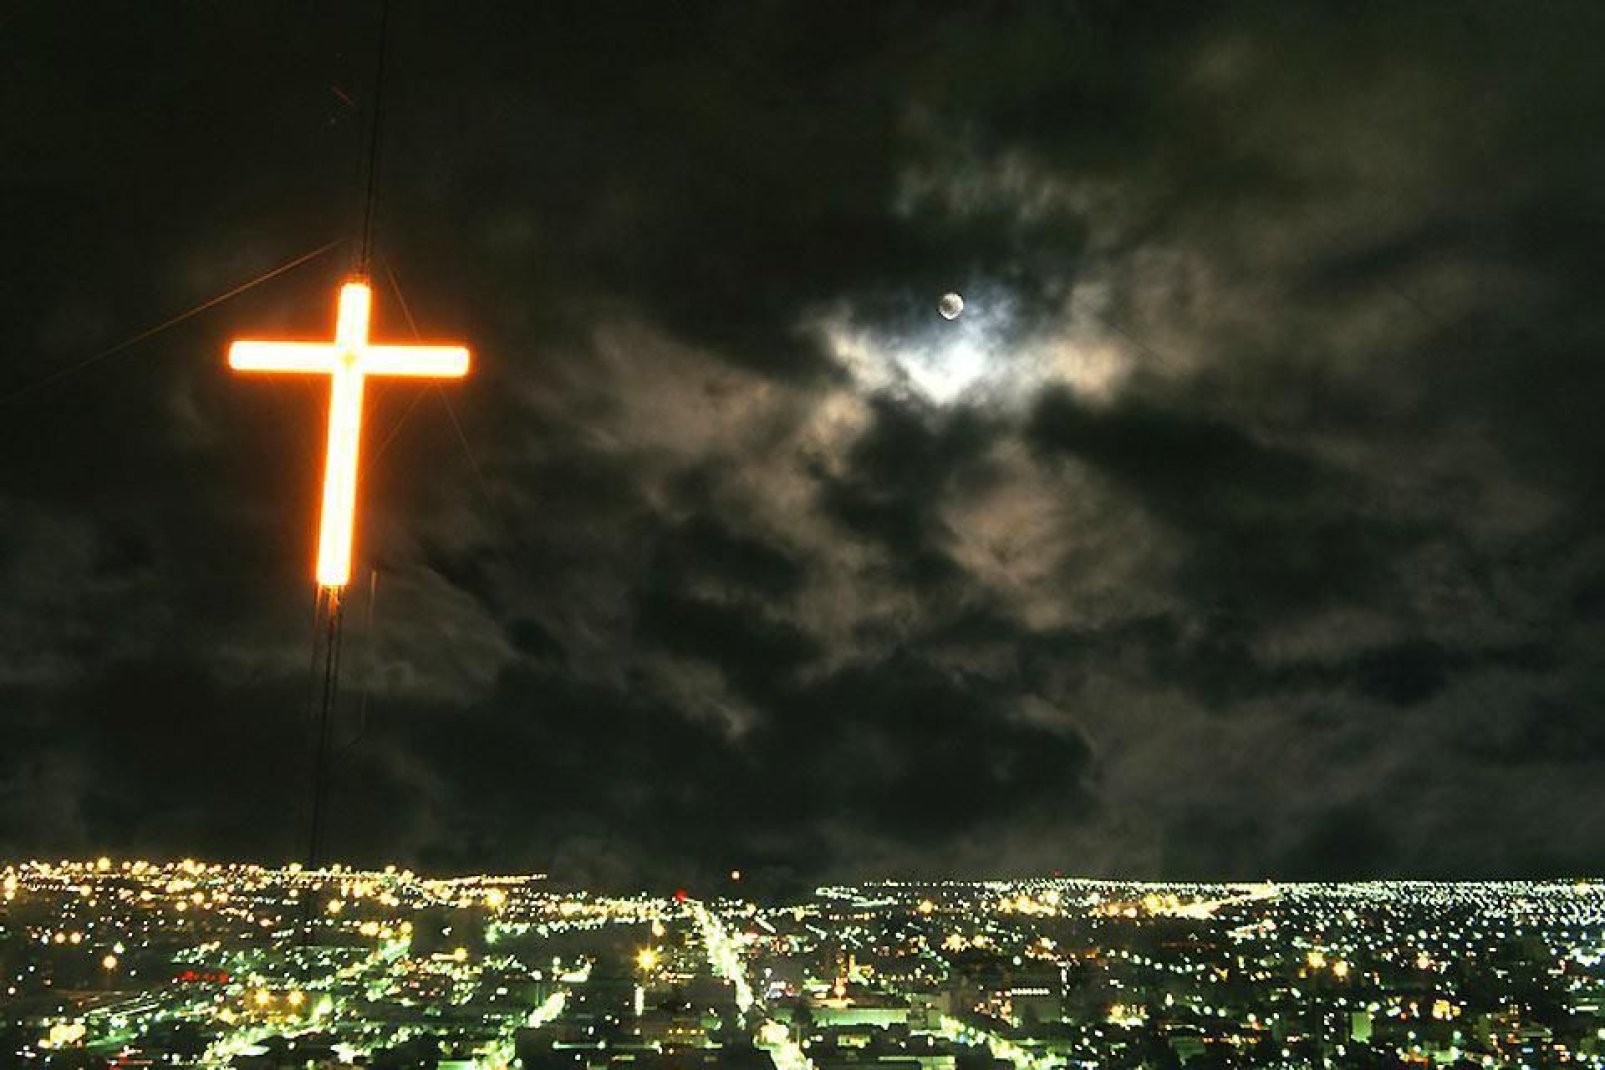 A pink cross illuminates the city of Bloemfontein by night.